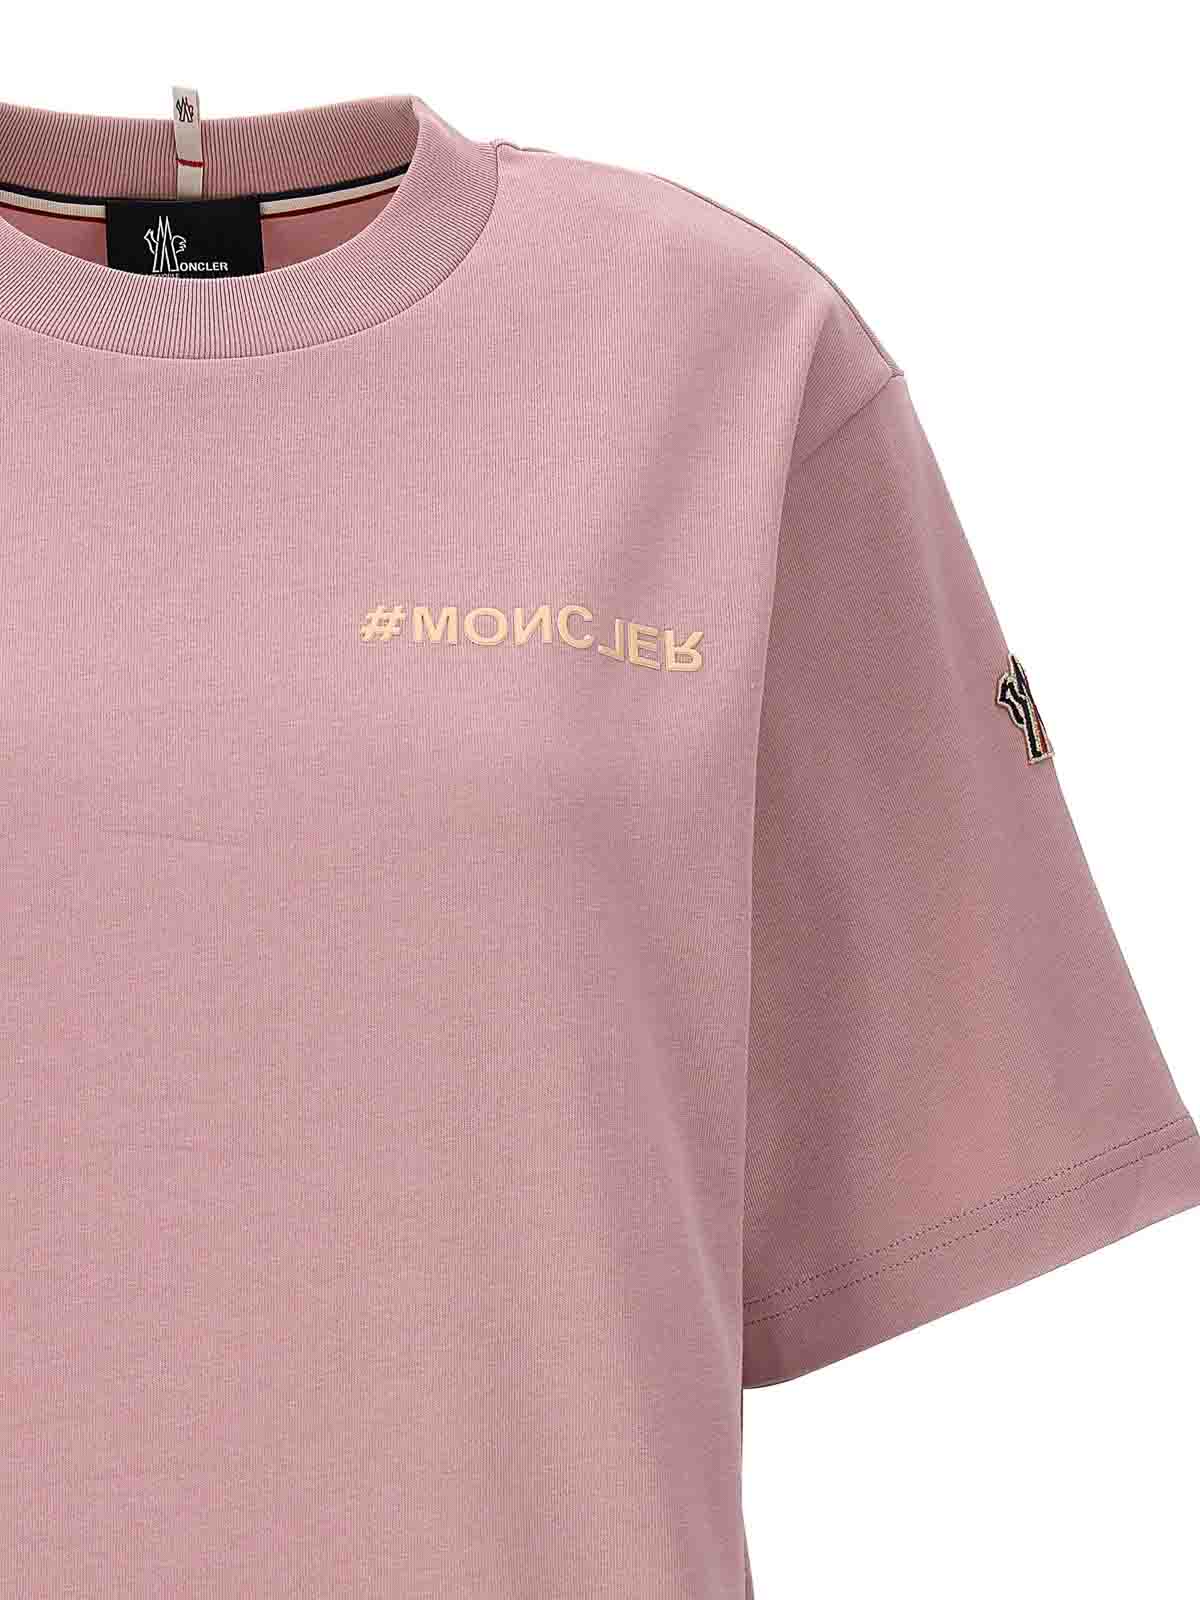 Shop Moncler Camiseta - Color Carne Y Neutral